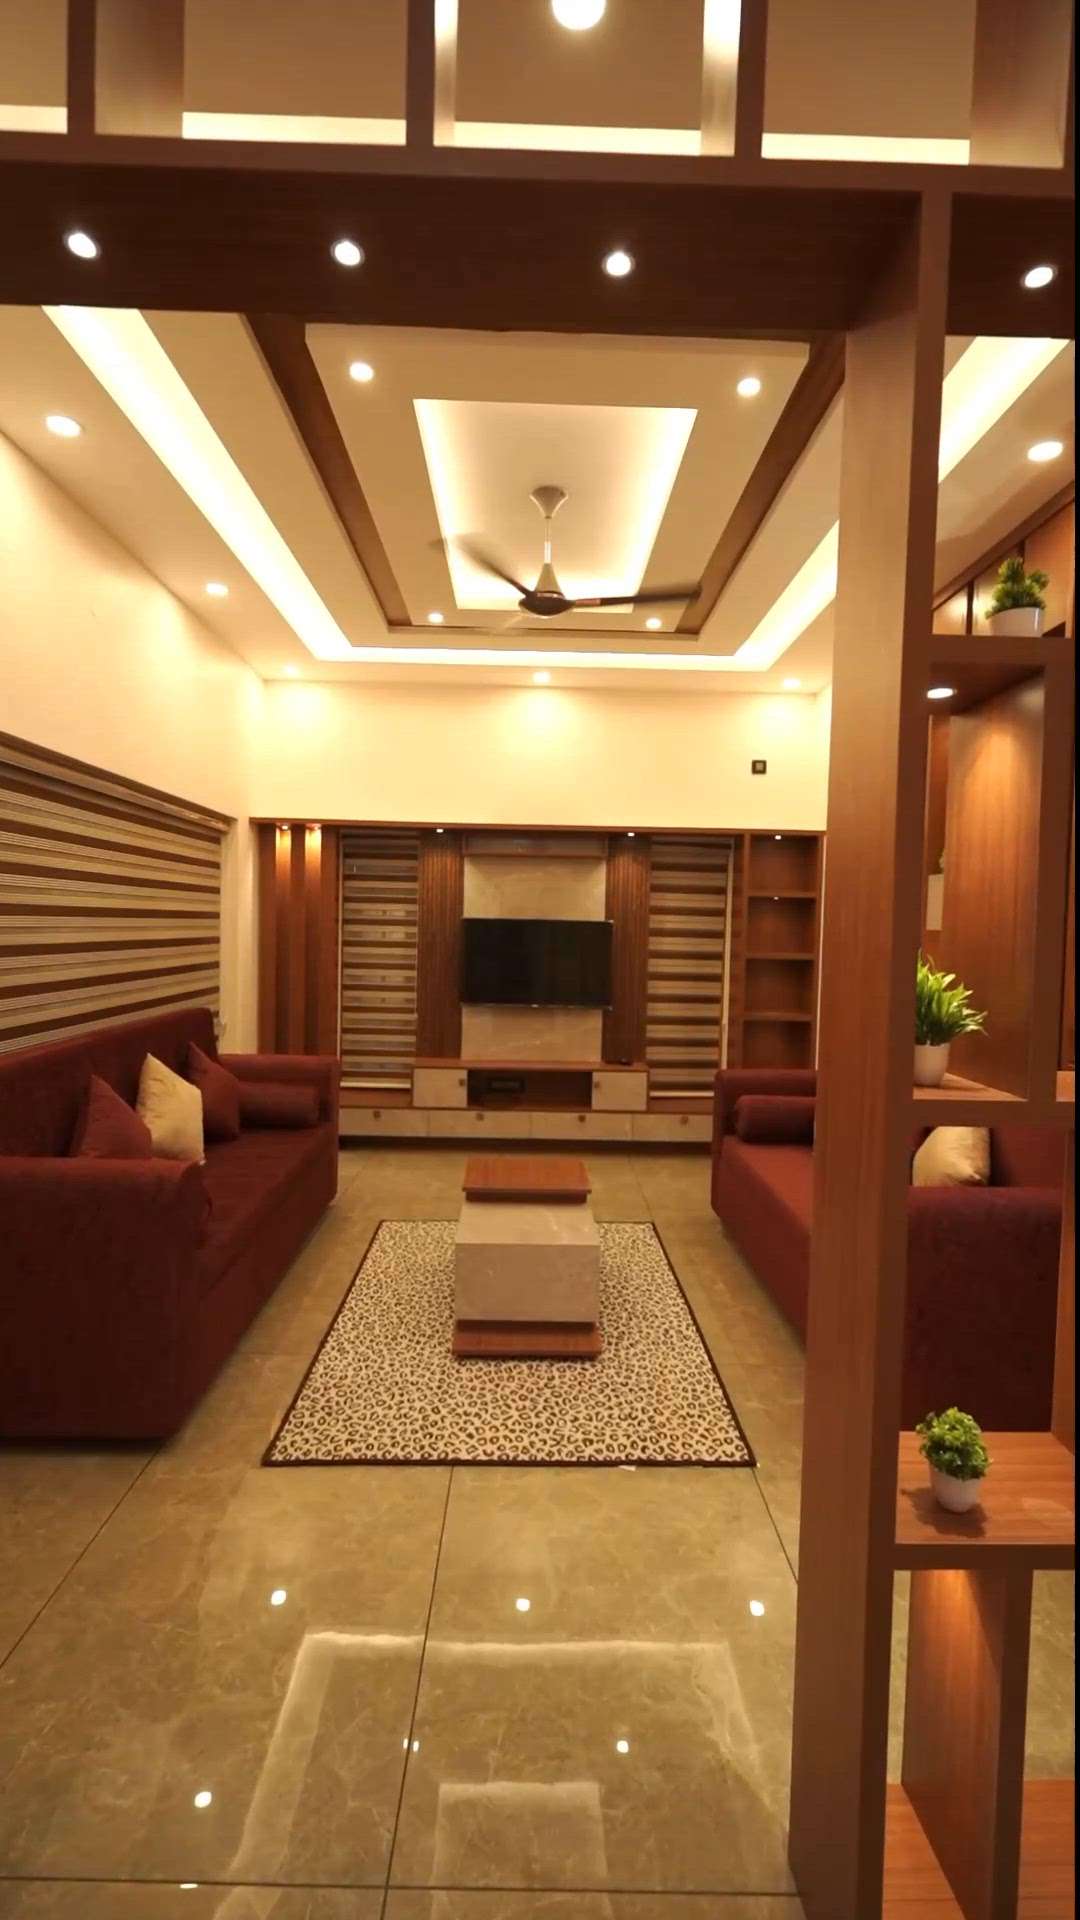 completed project ❤

#LivingroomDesigns  #tvunits  #InteriorDesigner